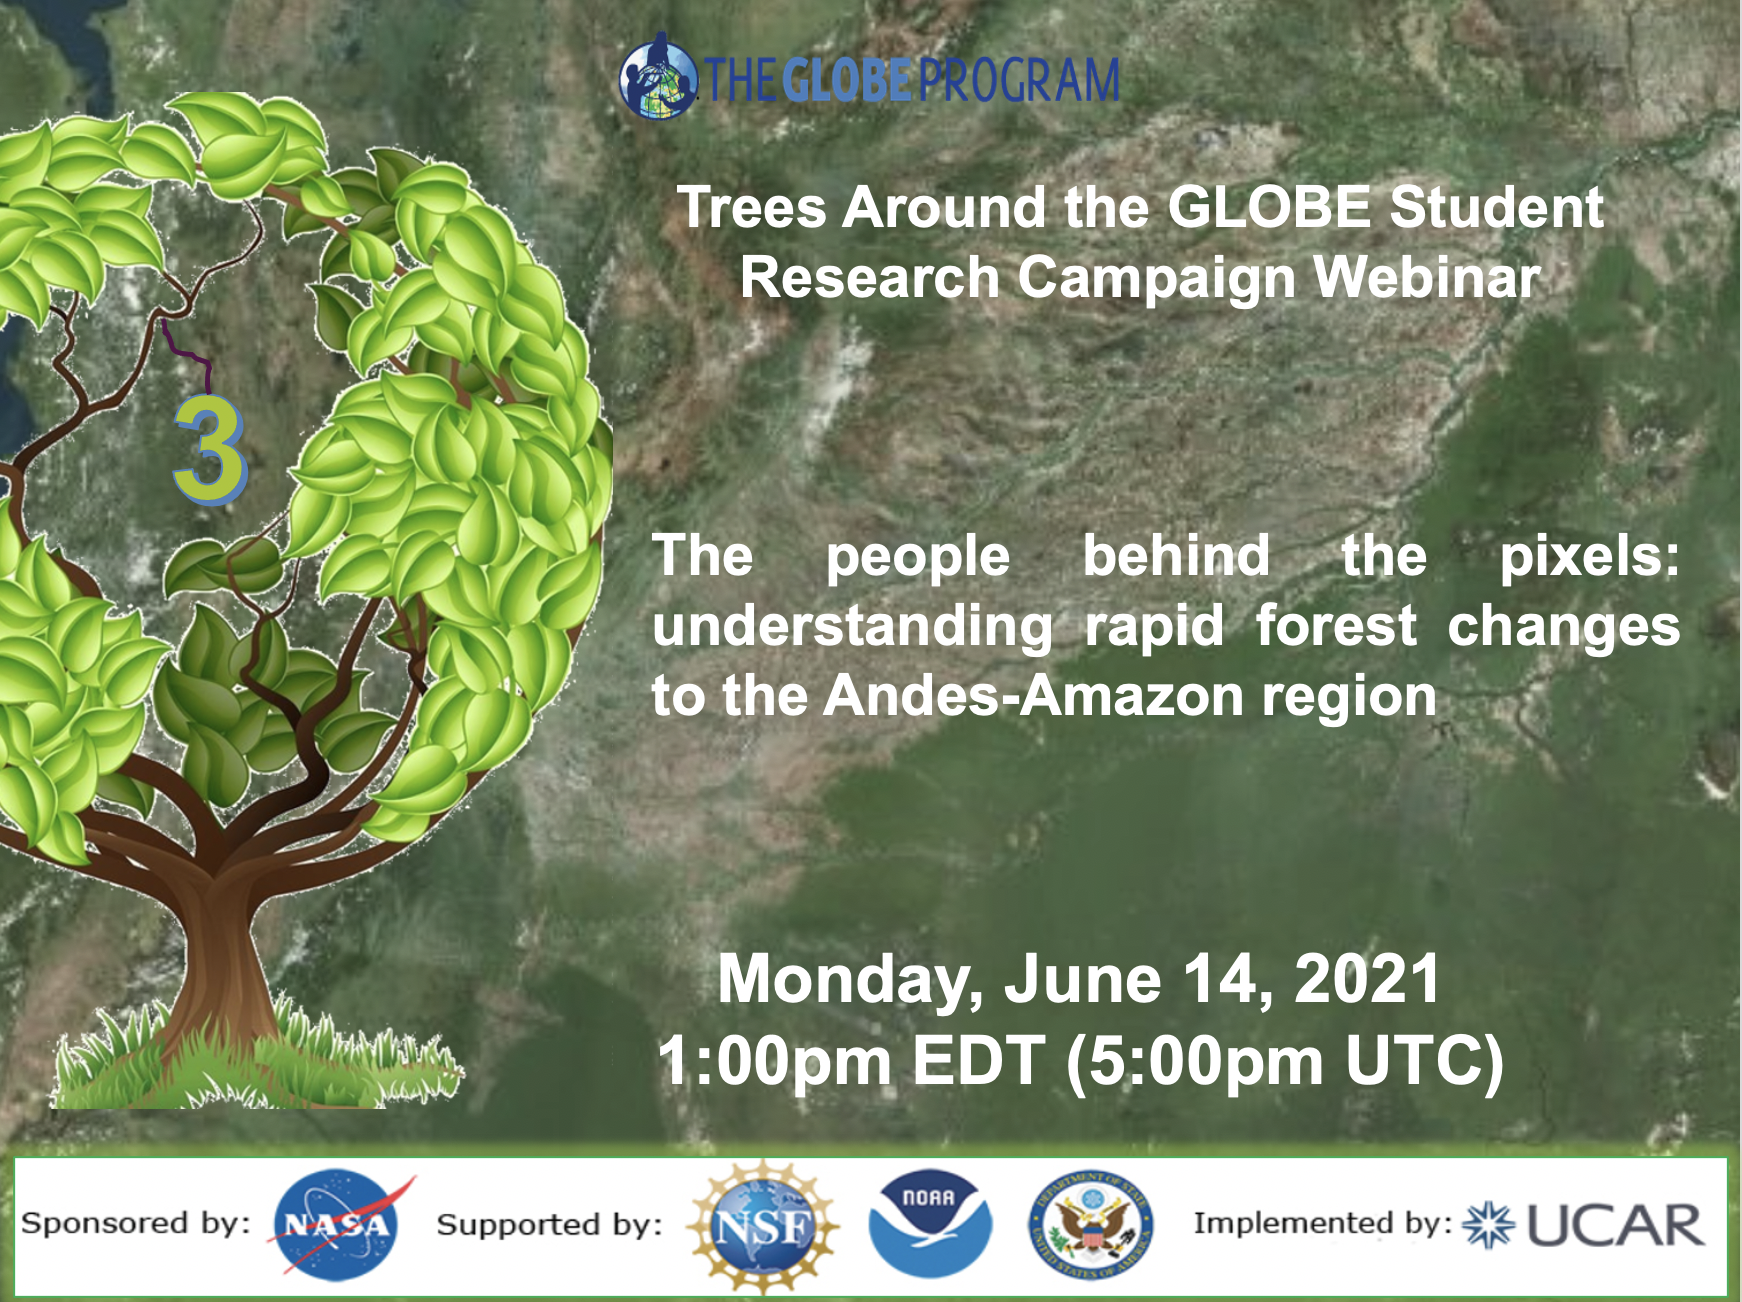 Trees Around the GLOBE 14 June webinar shareable